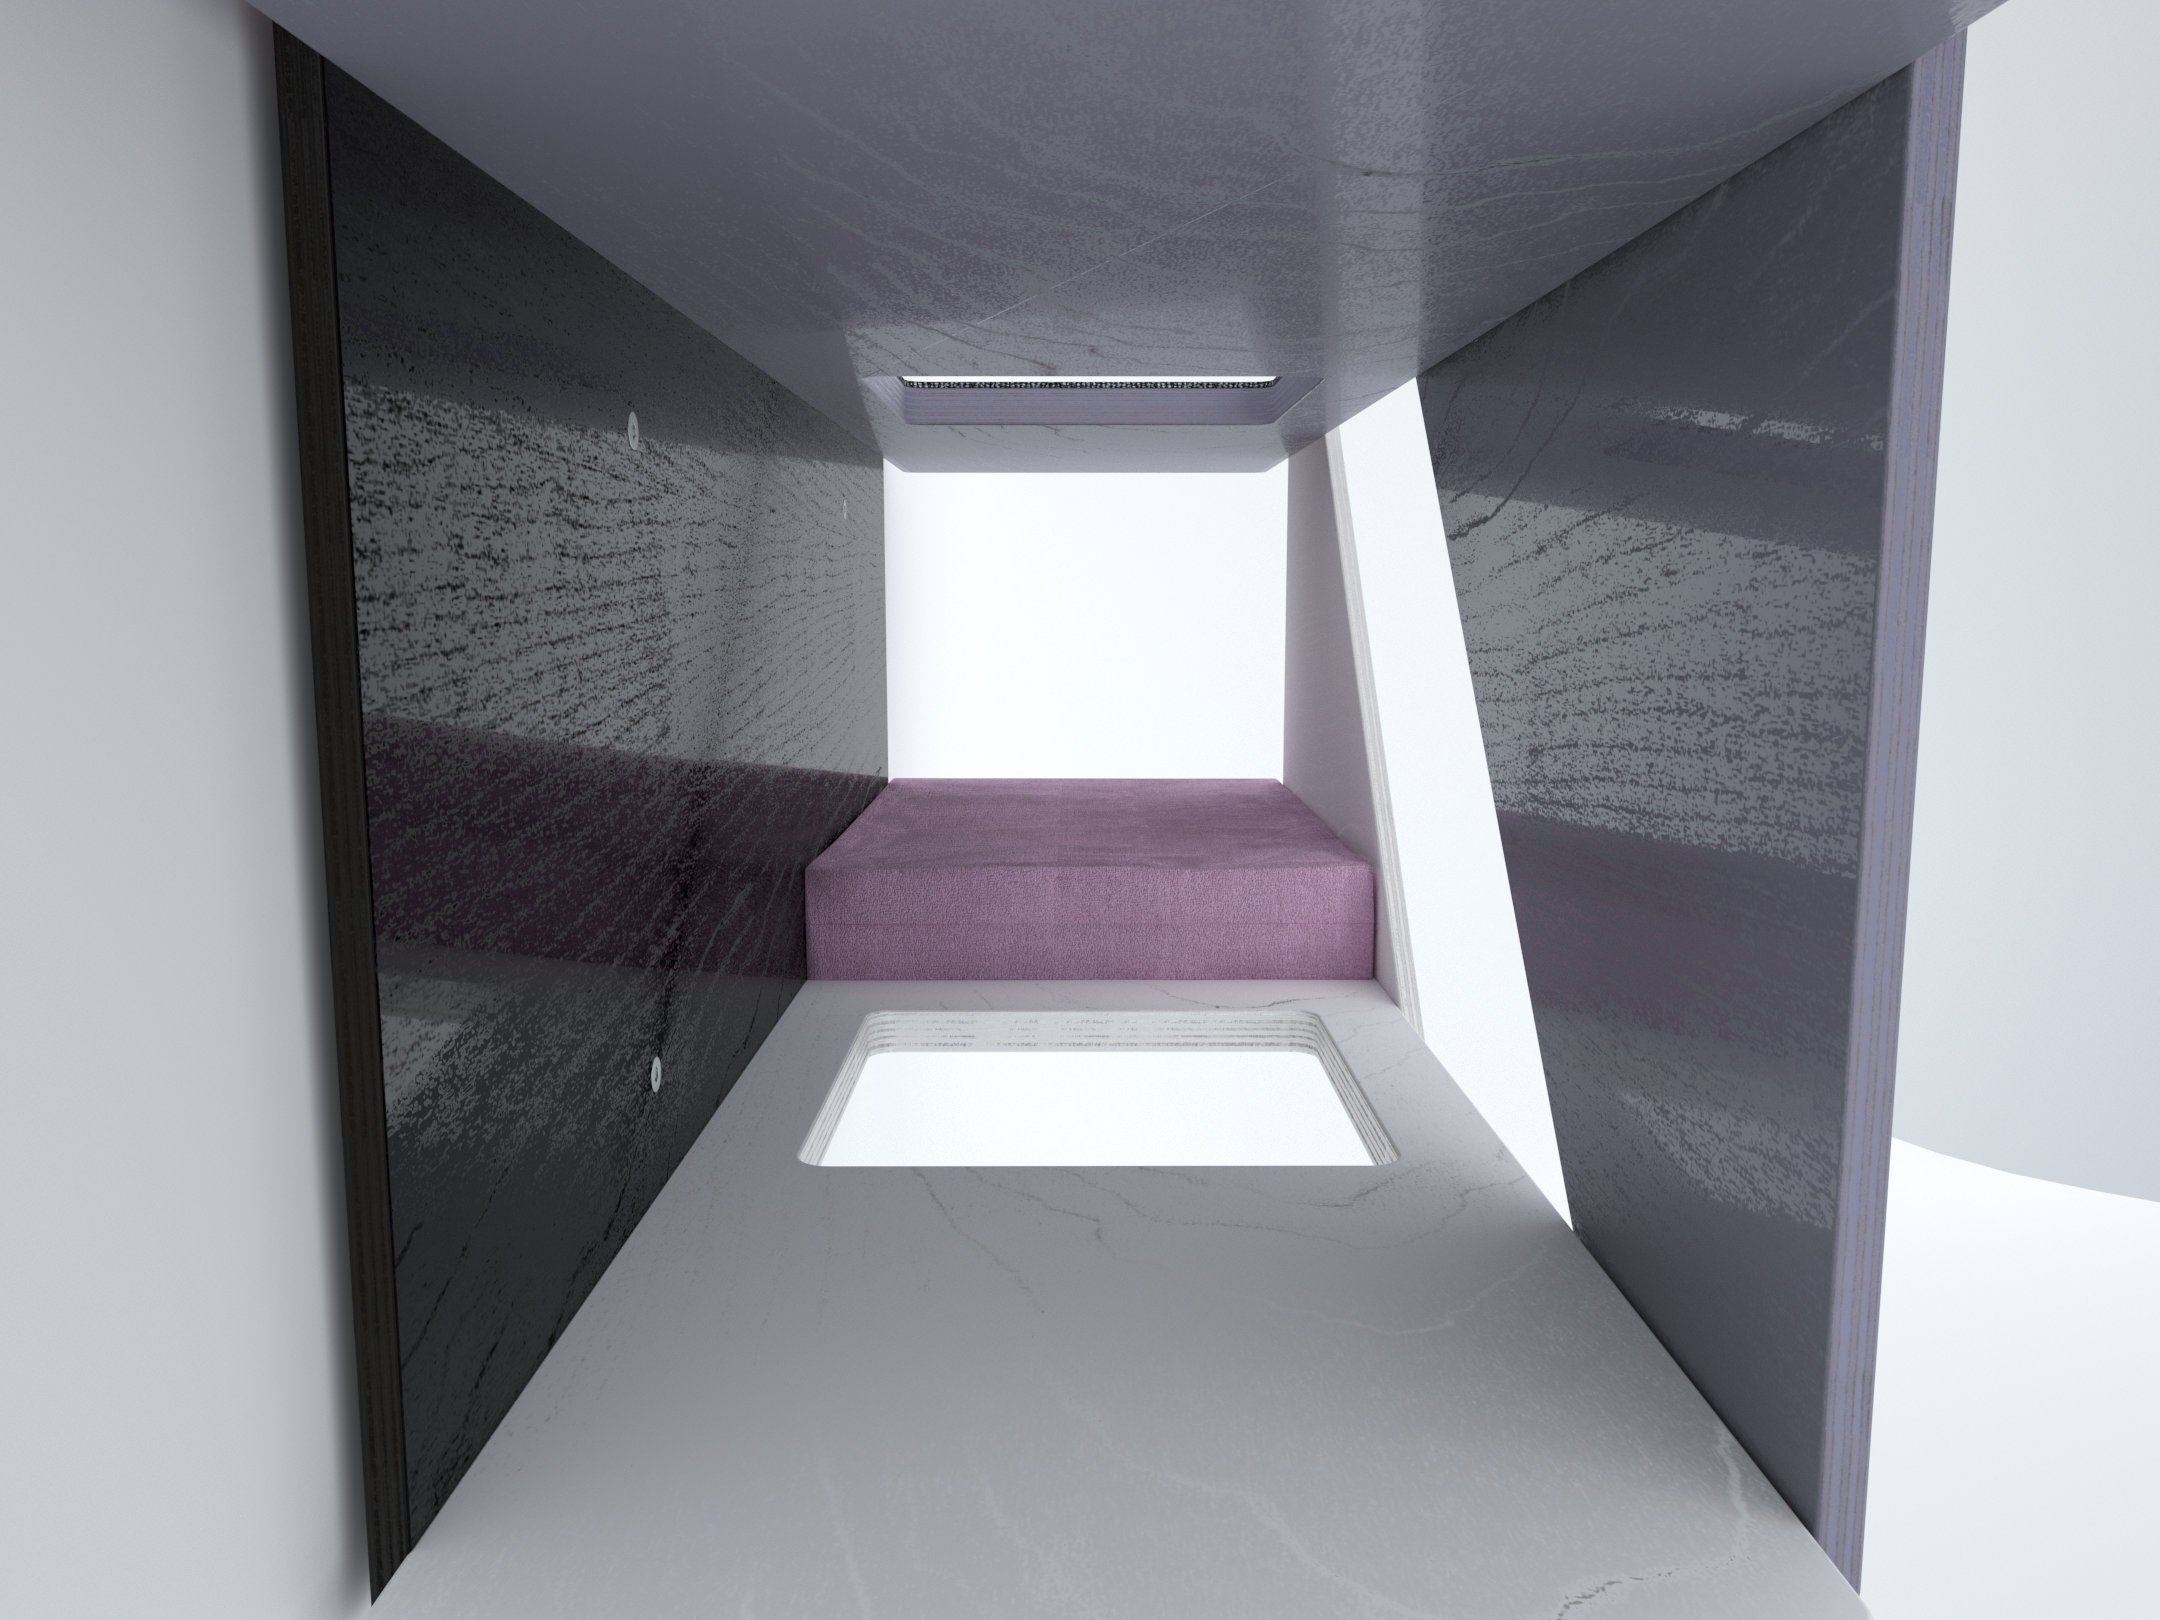 Big Cat Wall Shelf Bed Box - BigCat Sharp Tunnel - Scratchy Things Premium Pet Furniture